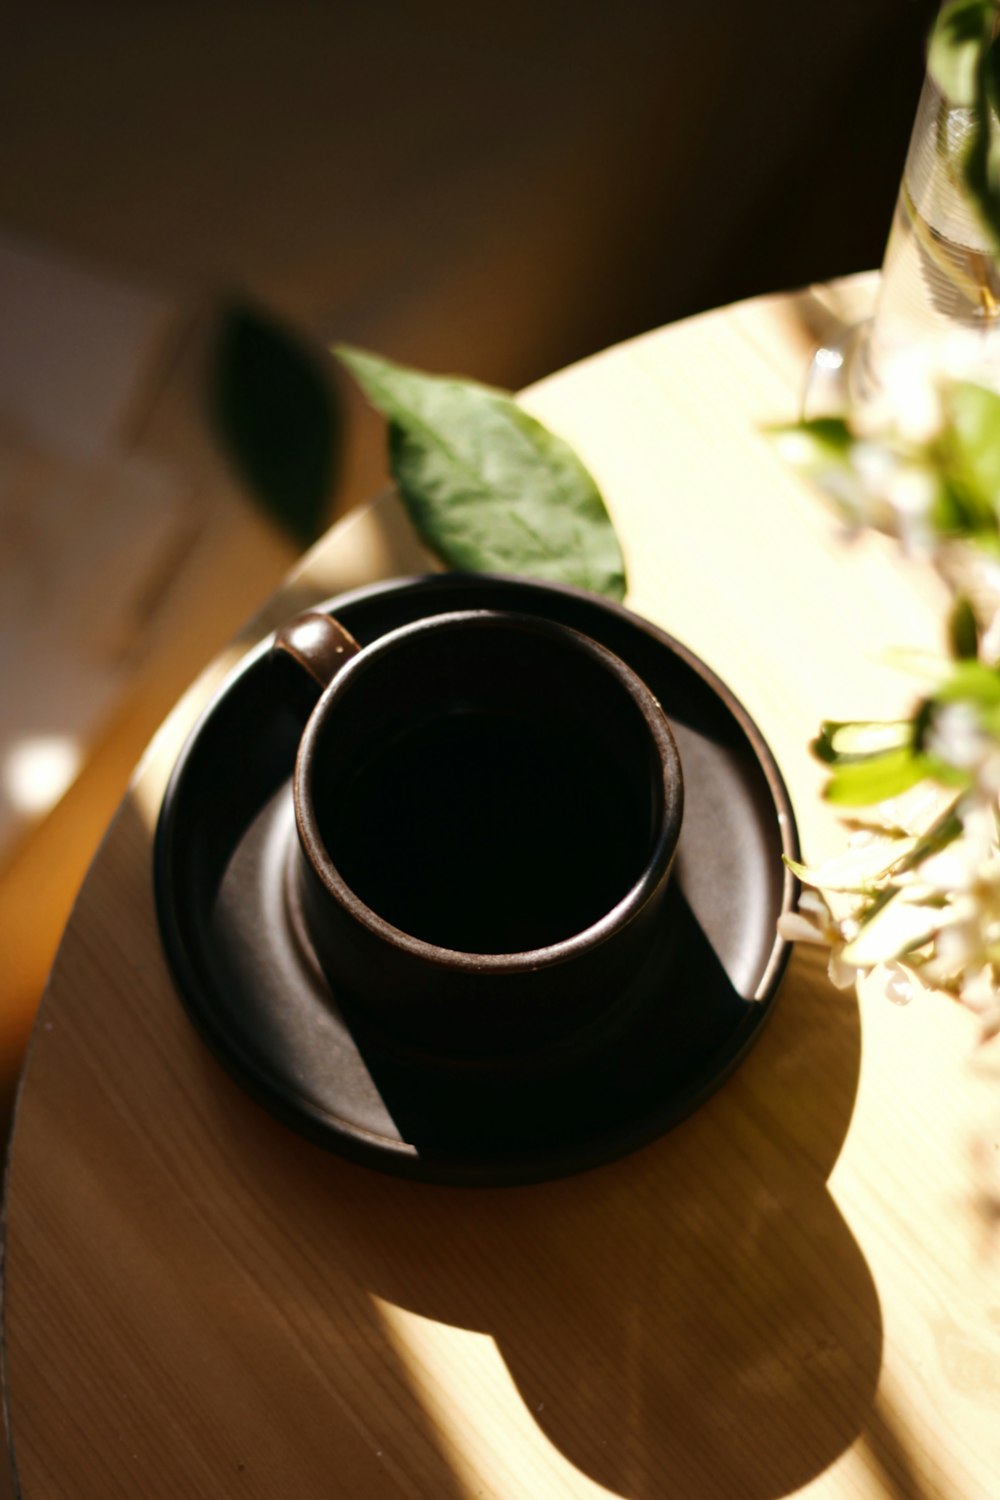 black liquid in black ceramic mug on brown wooden table